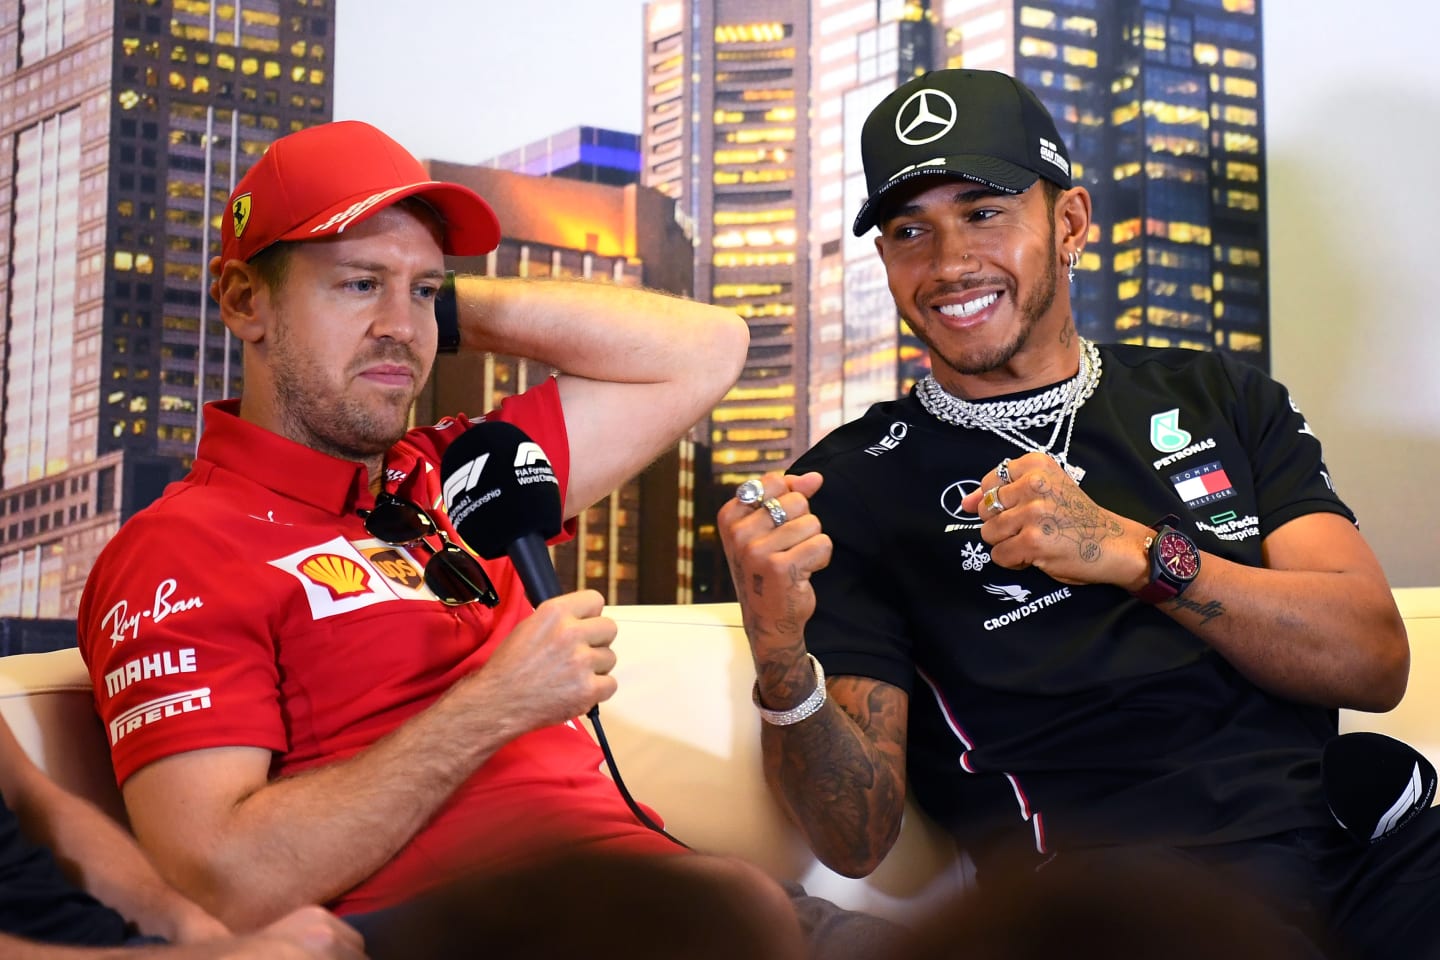 MELBOURNE, AUSTRALIA - MARCH 12: Lewis Hamilton of Great Britain and Mercedes GP and Sebastian